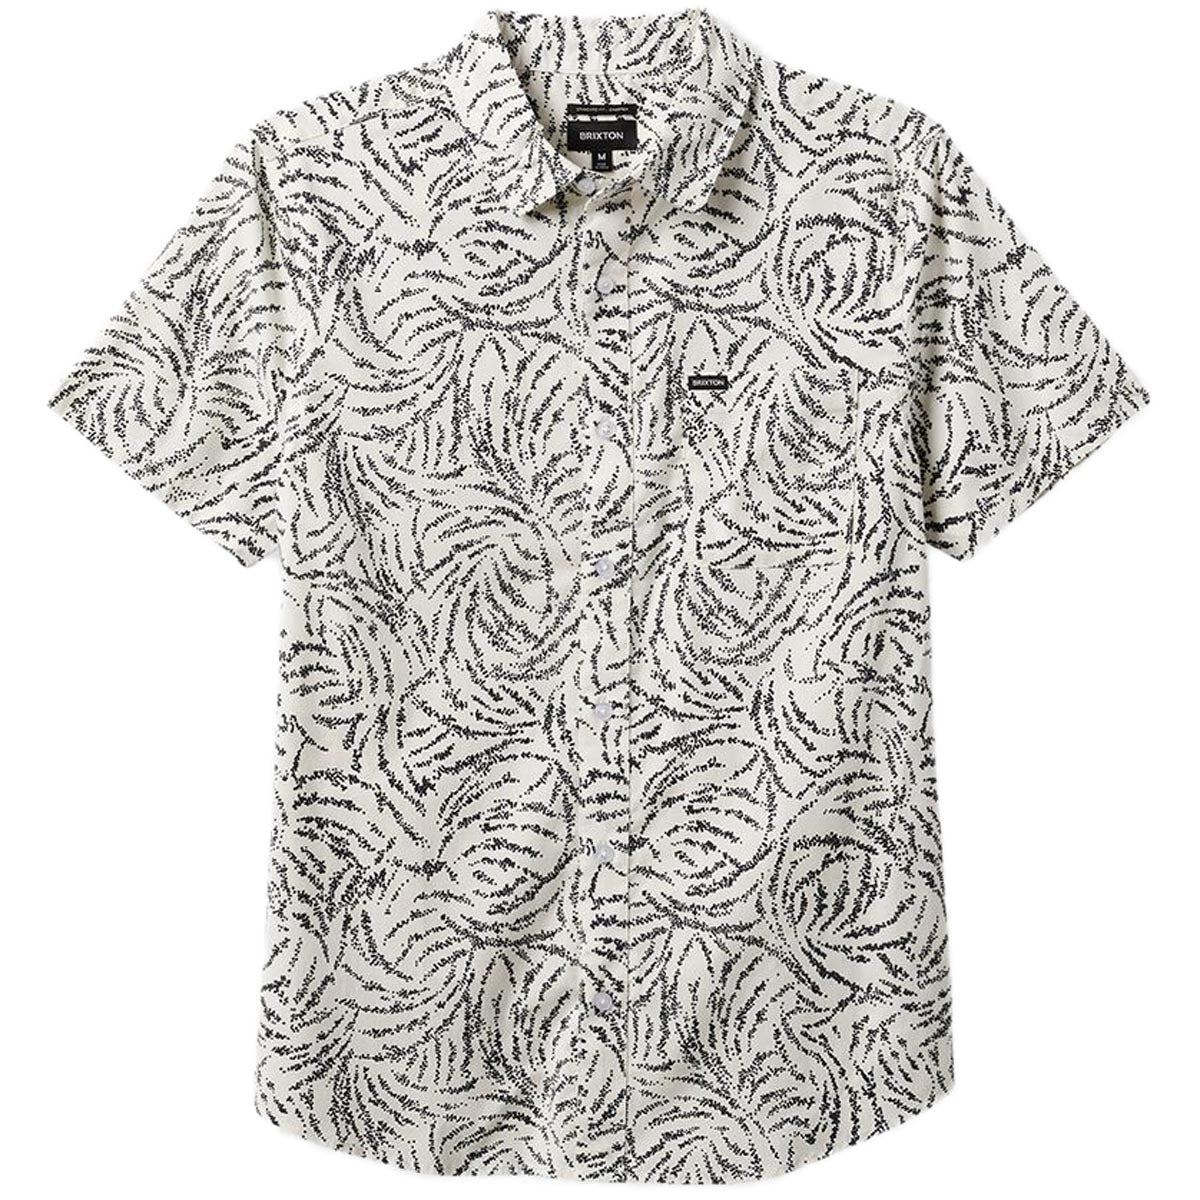 Brixton Charter Print Shirt - Off White/Black Ripple image 2